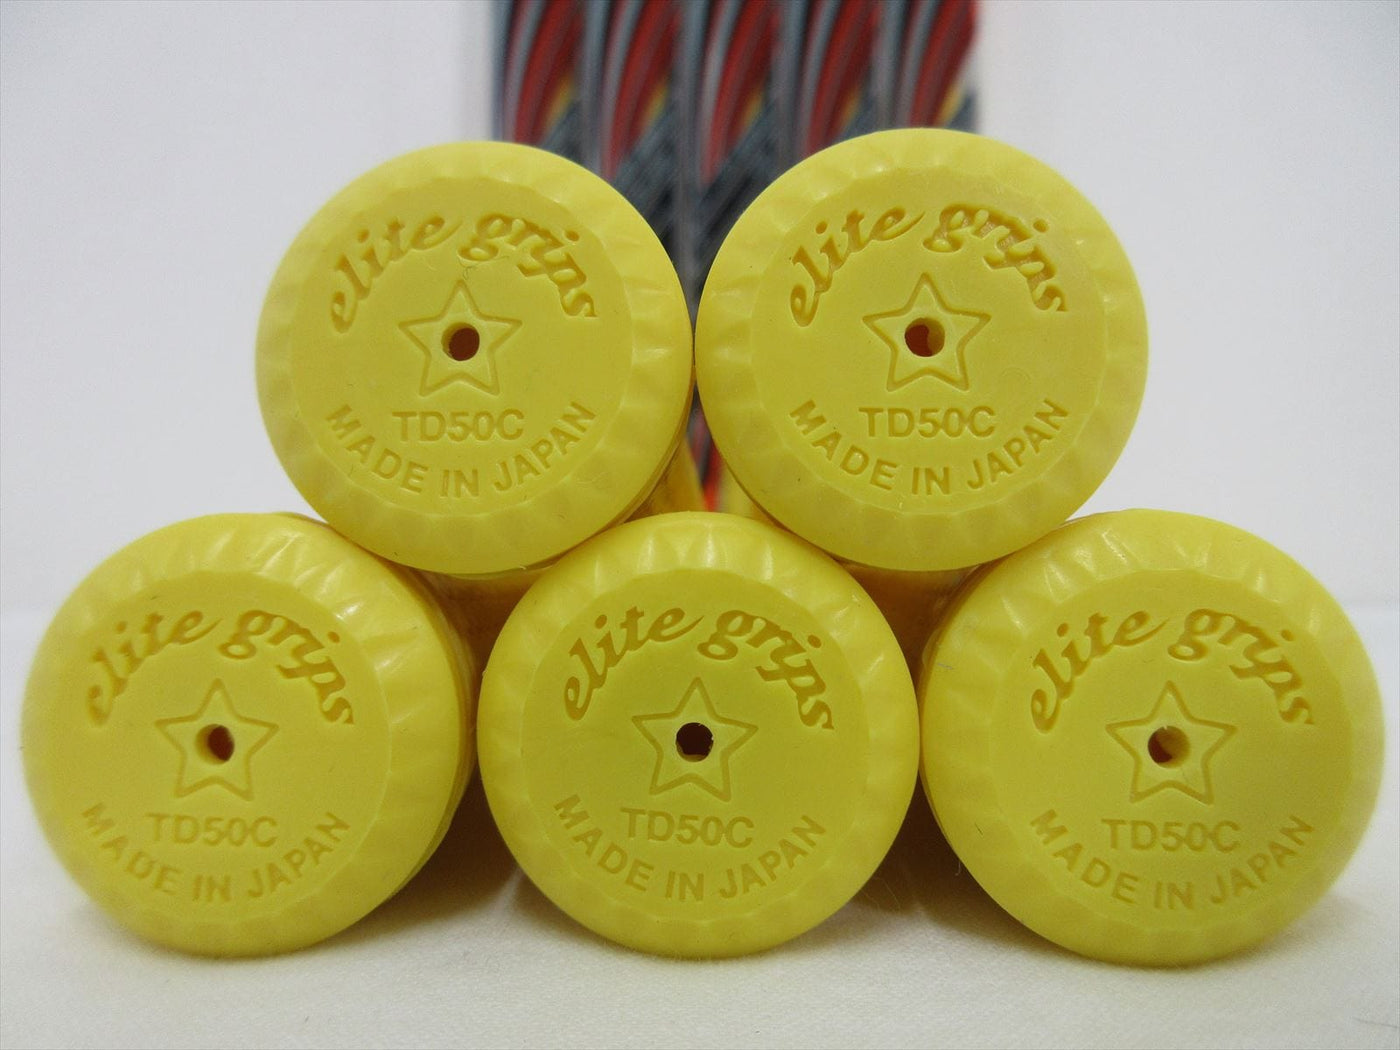 nexgen d spec grip yellow 5 20 pieces collaborated with elite grips